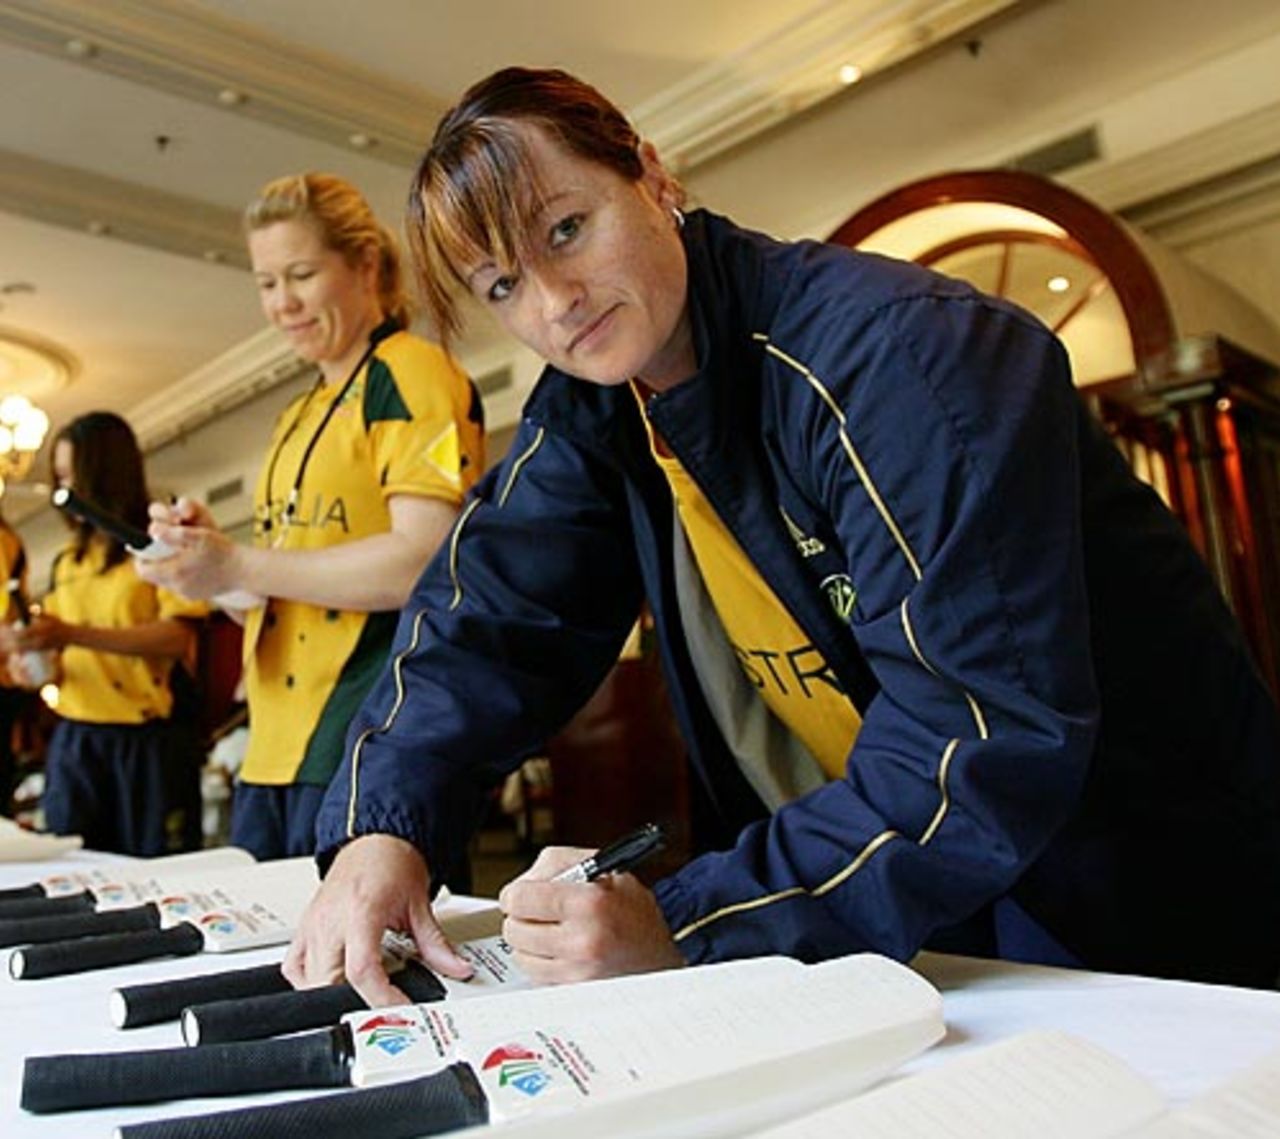 Karen Rolton signs bats, women's World Cup, Sydney, March 3, 2009